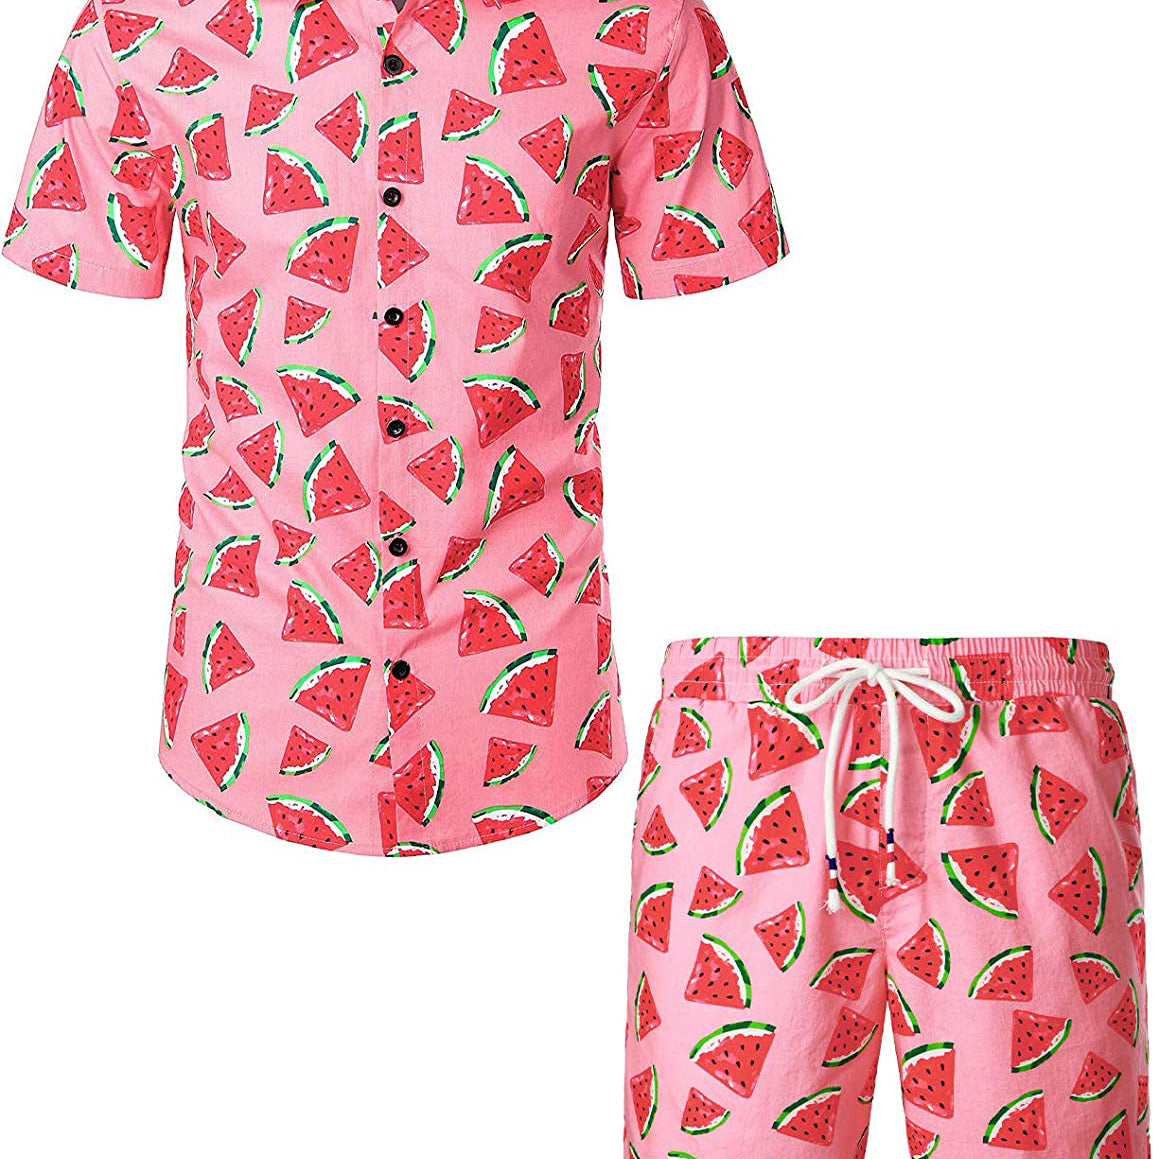 Men's Watermelon Print Cotton Hawaiian Matching Shirt and Shorts Set